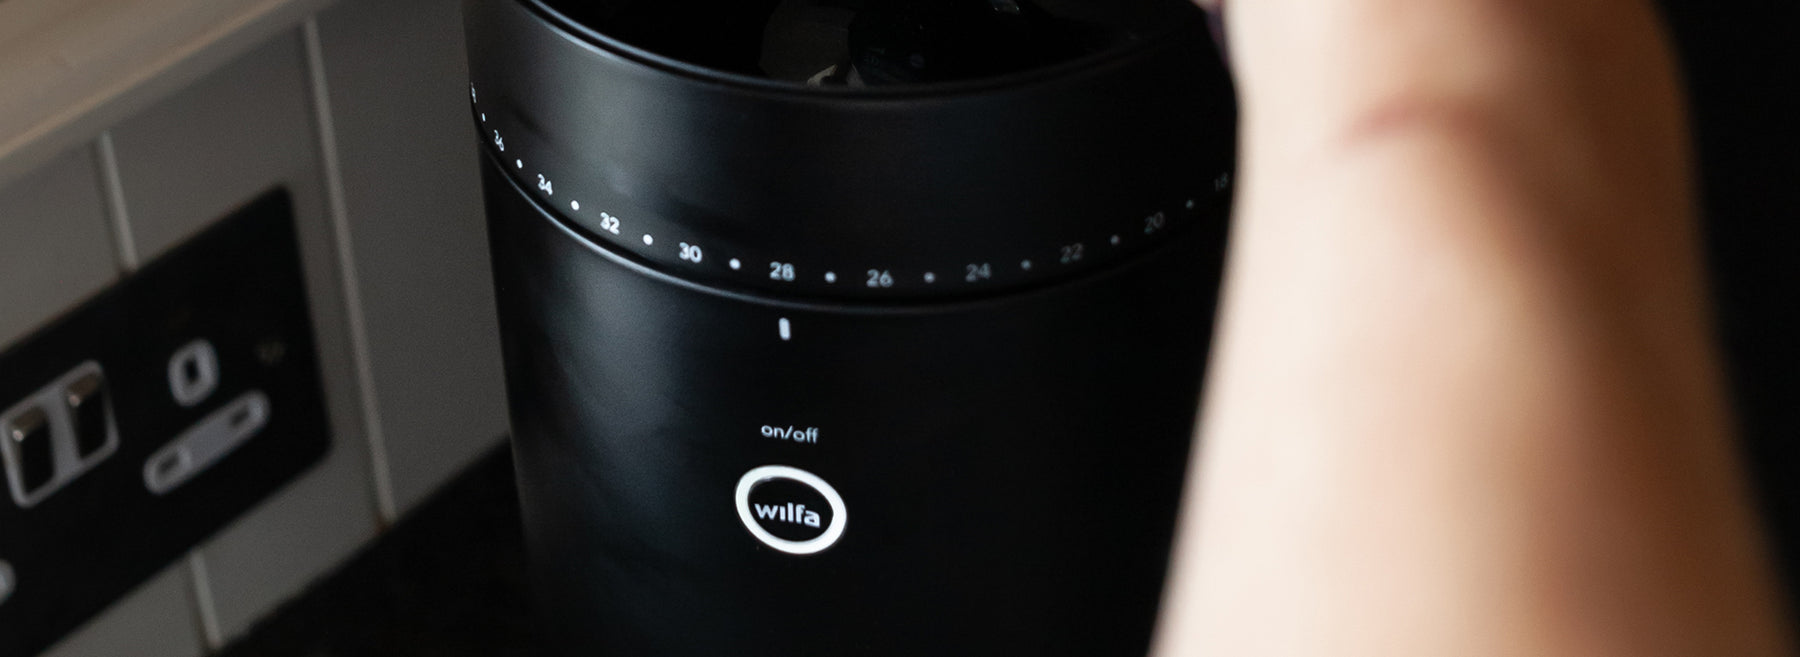 Wilfa Uniform + Coffee Grinder Review